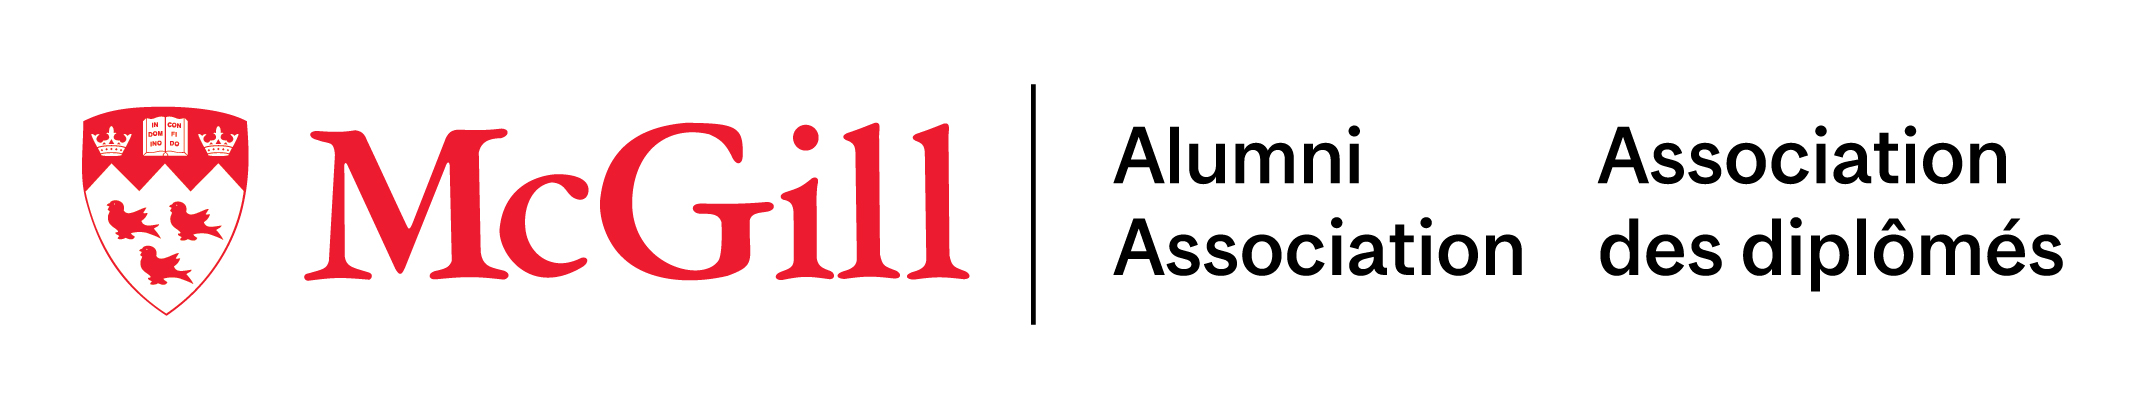 McGill - Association des diplômés